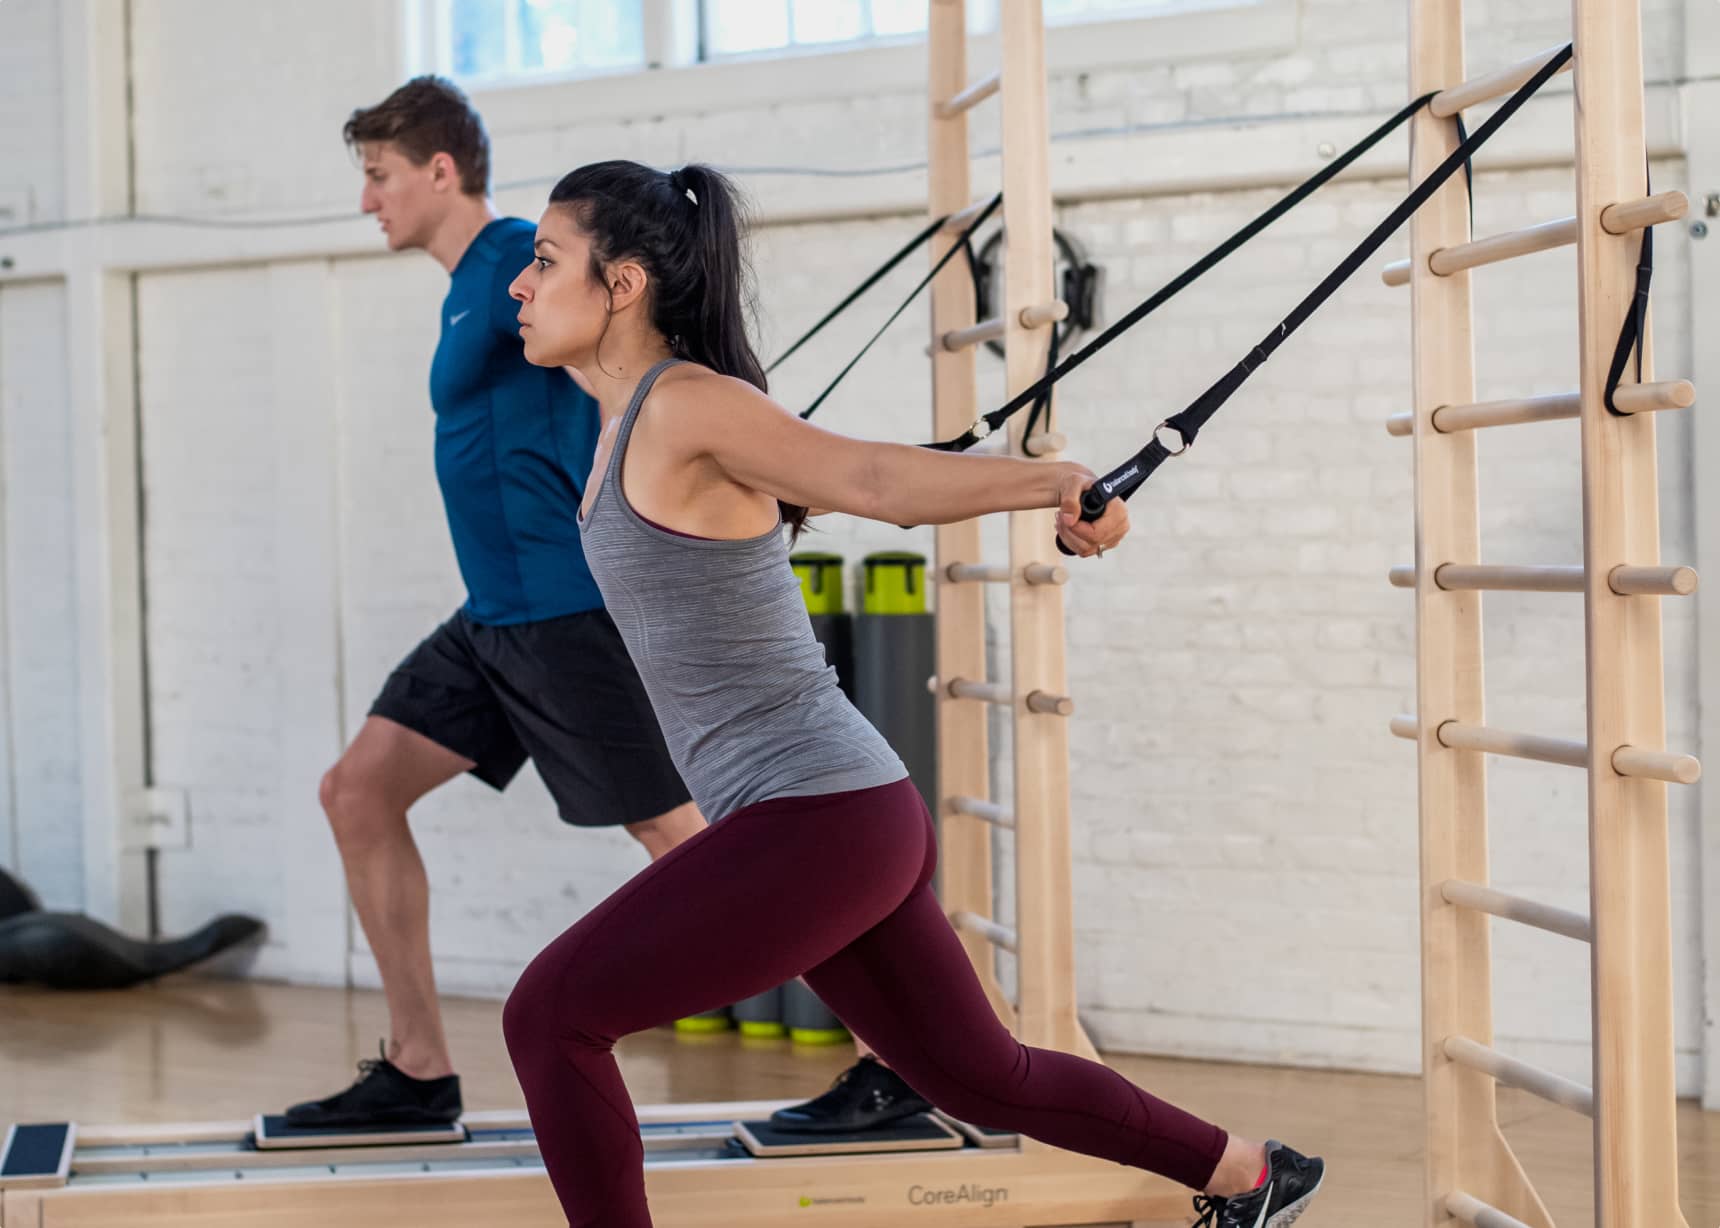 Balanced Body Pilates Ladder Barrel for Core Strength and Flexibility